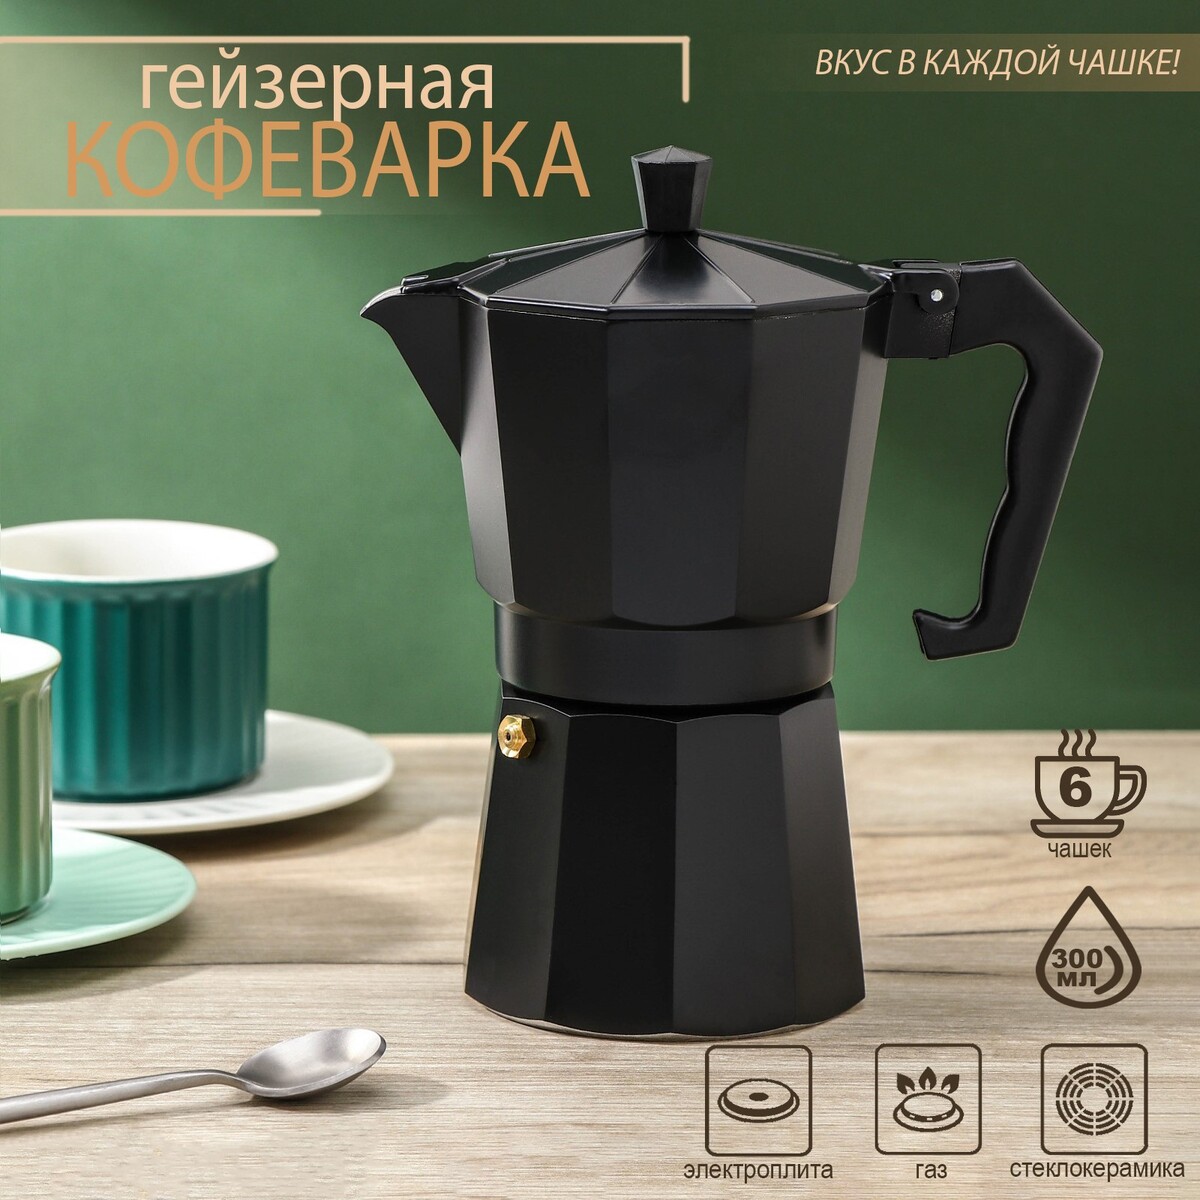 Кофеварка гейзерная доляна alum black, на 6 чашек, 300 мл кофеварка гейзерная 330 мл vinzer latte nero 6 чашек